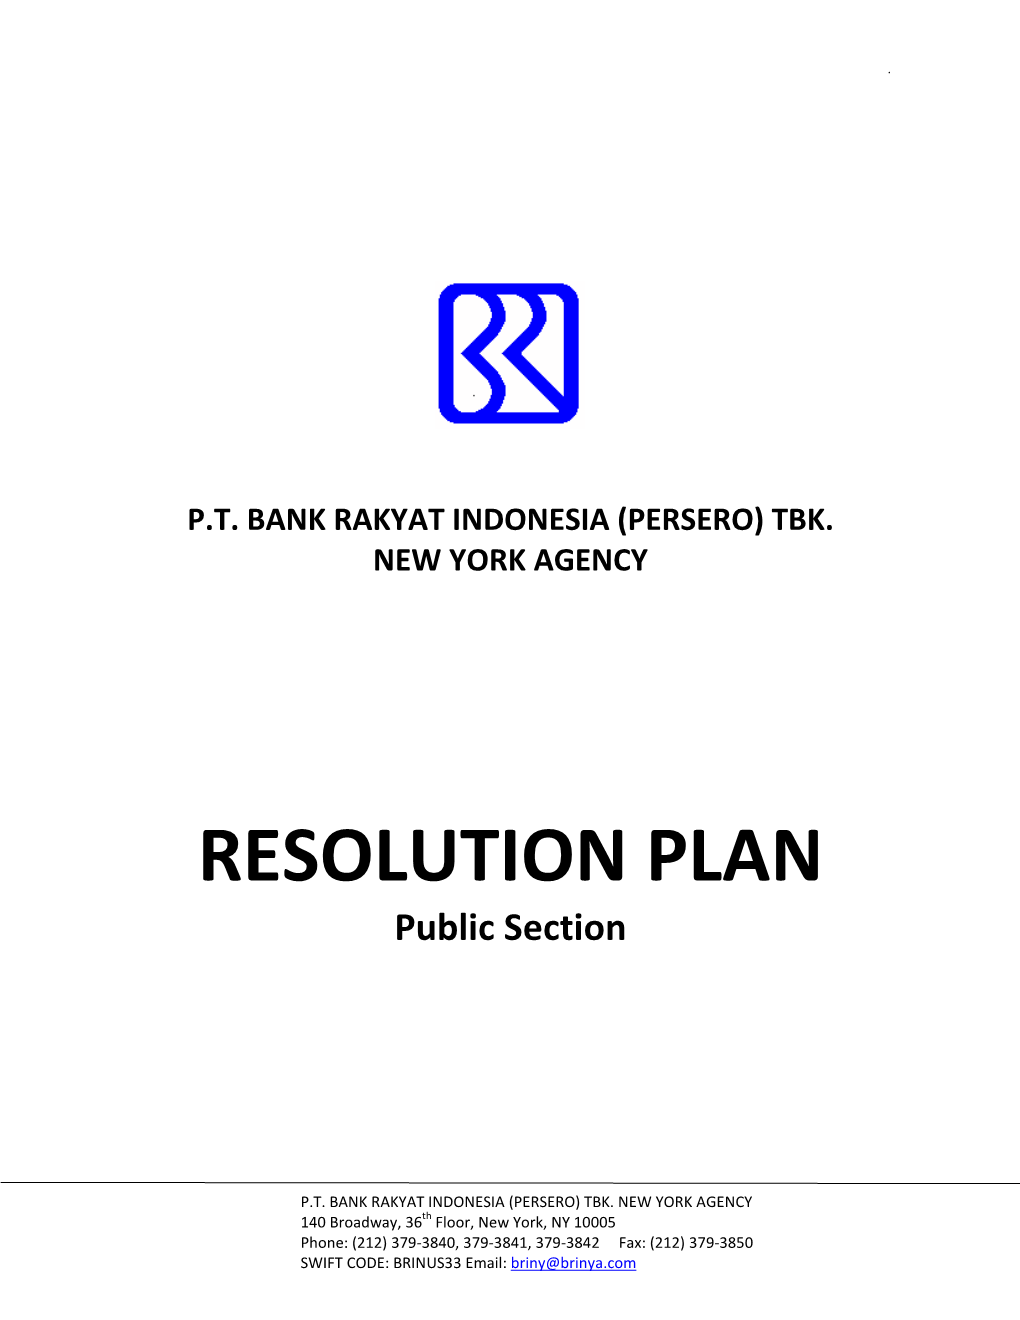 Pt Bank Rakyat Indonesia (Persero) Tbk. New York Agency